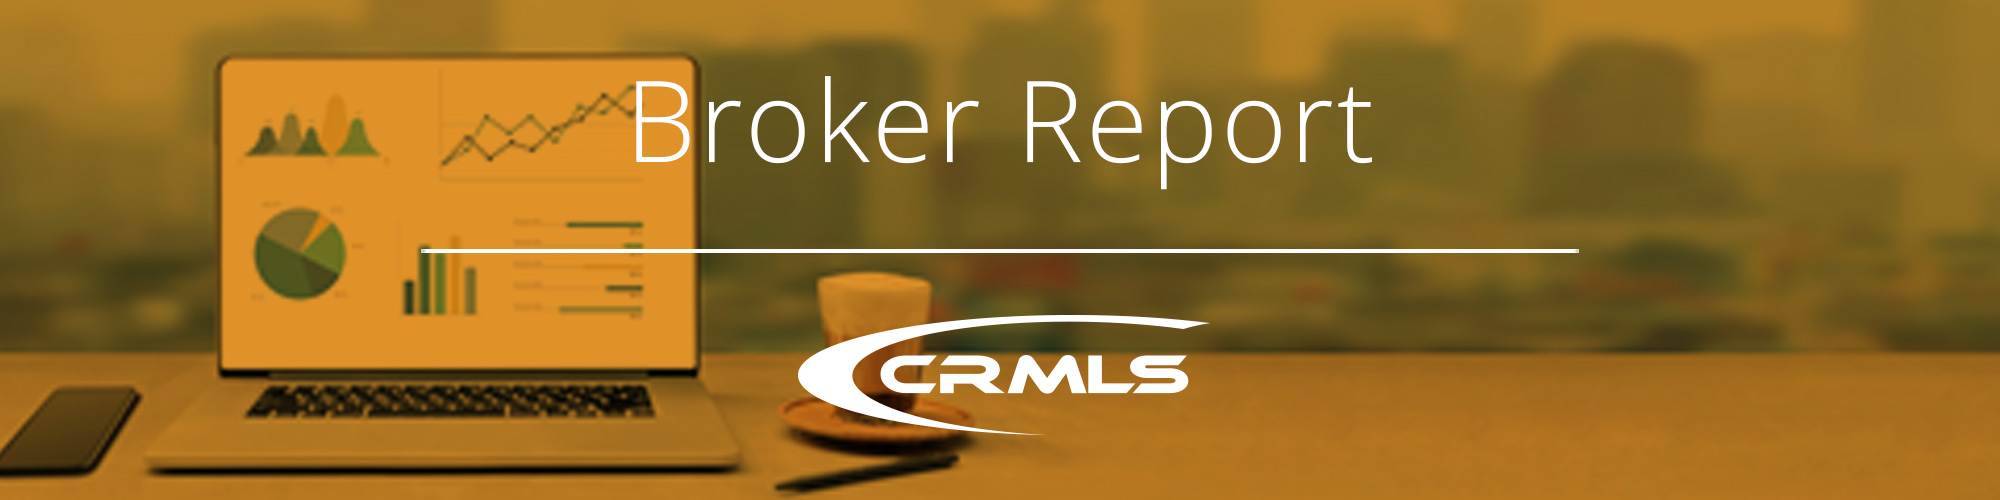 CRMLS Broker Report: 2021 Year End Update - CRMLS Blog